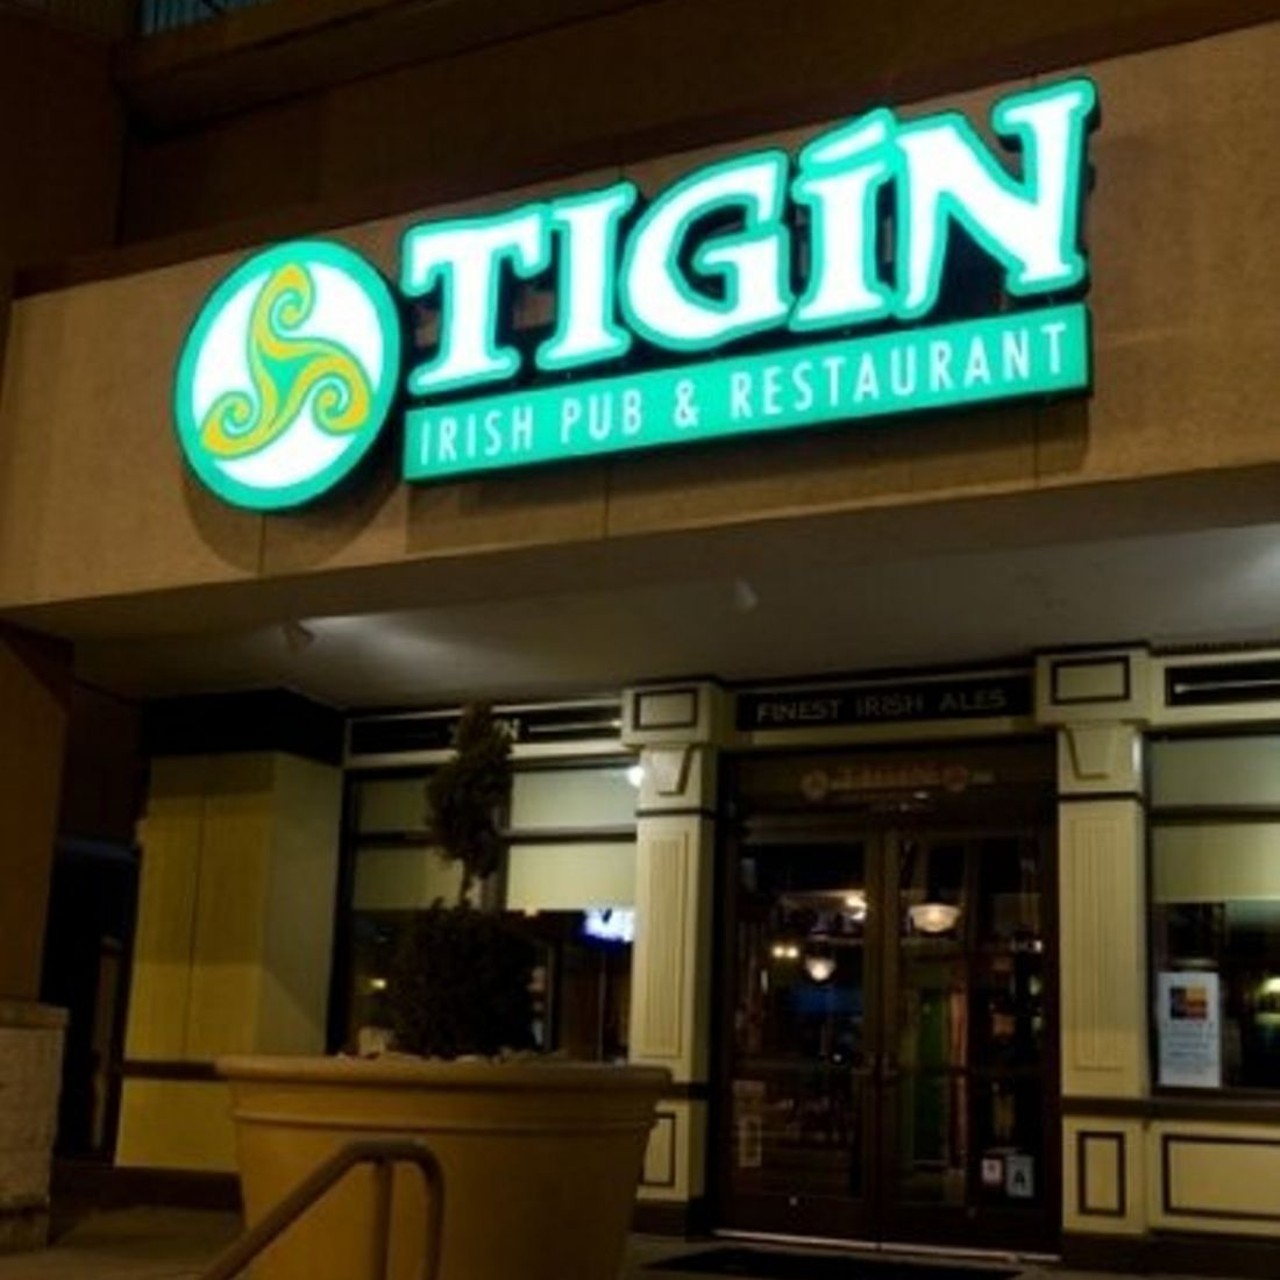 Tigin Irish Pub
(333 Washington Avenue)
Tigin Irish Pub closed in March of this year.
Photo credit: RFT File Photo